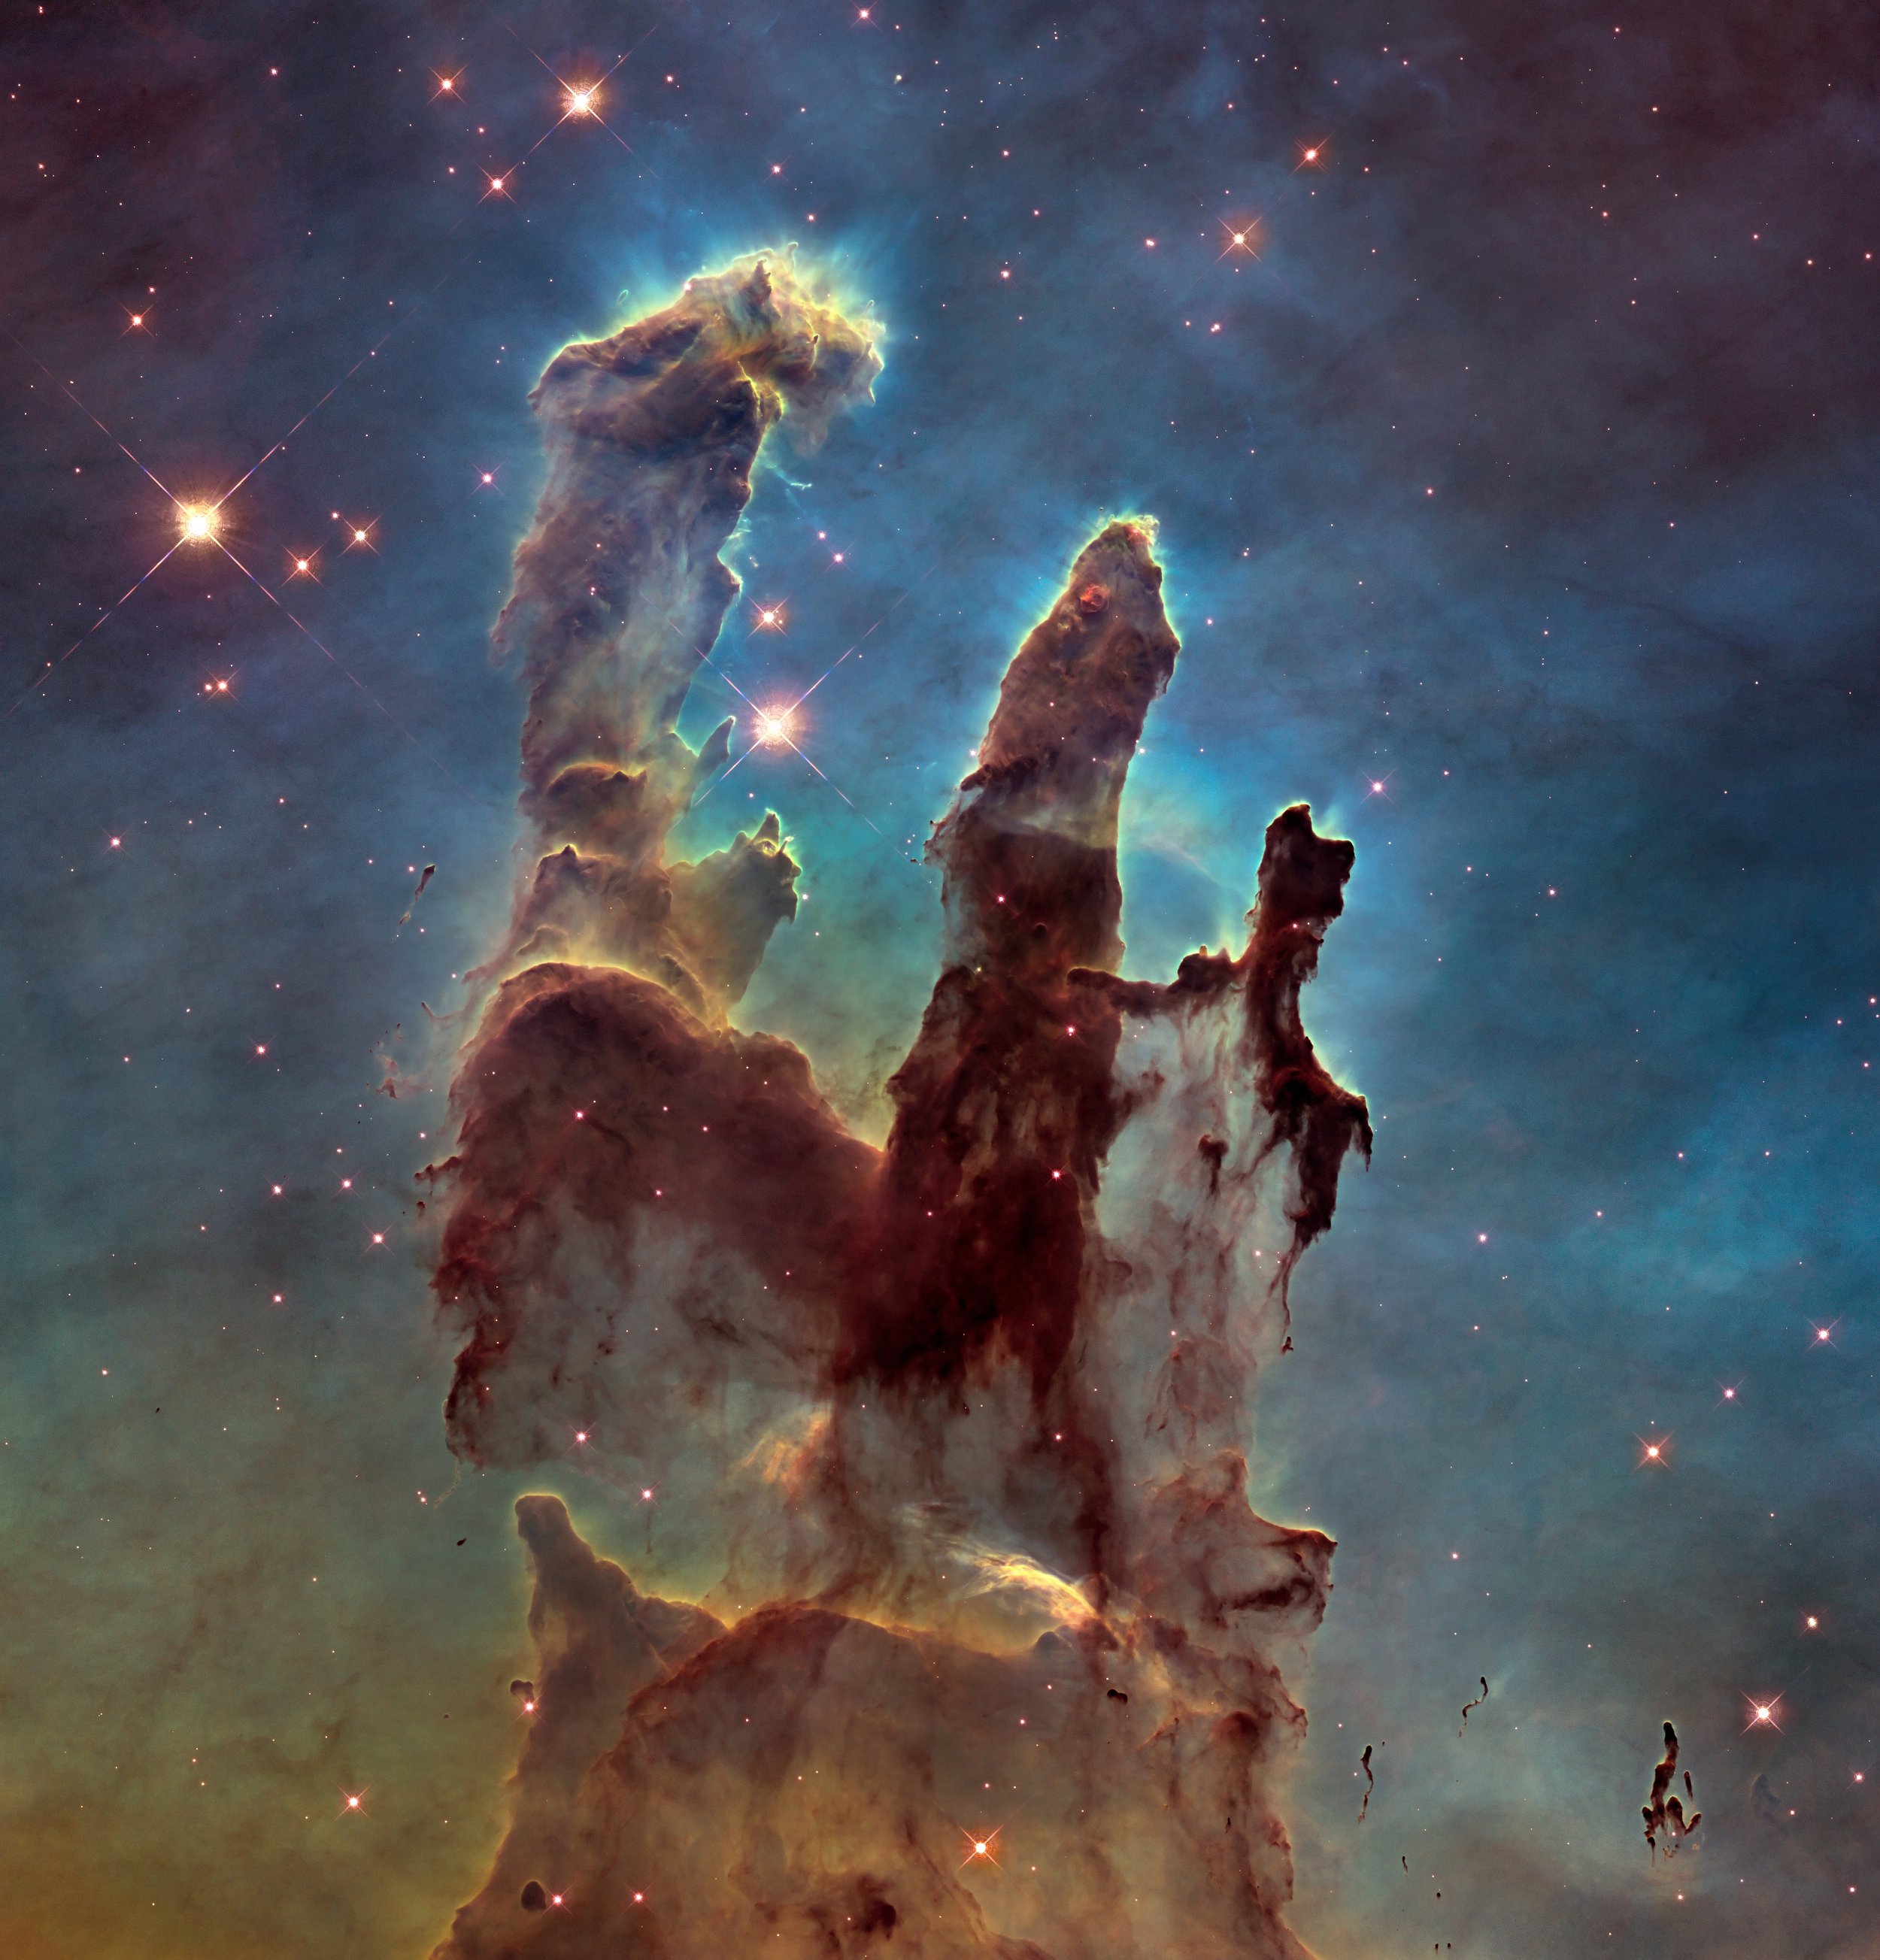 The Pillars of Creation in the Eagle Nebula Photo: NASA / STScl / webbtelescope.org